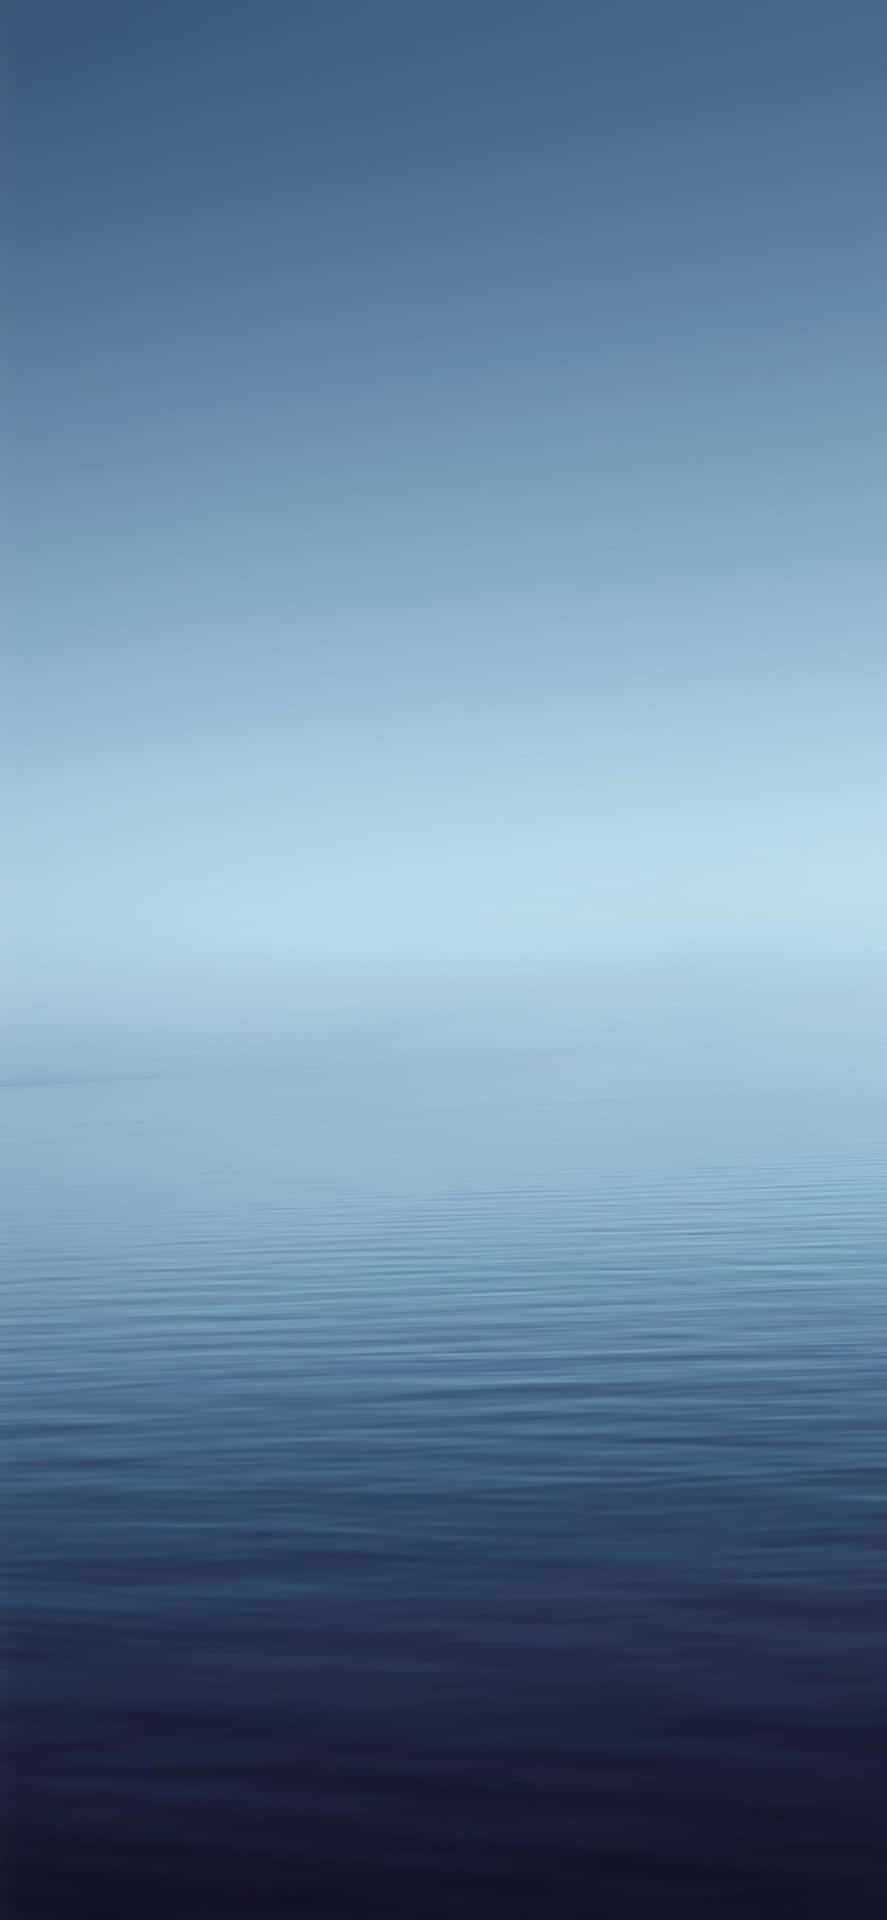 A Blue Ocean With A White Horizon Wallpaper